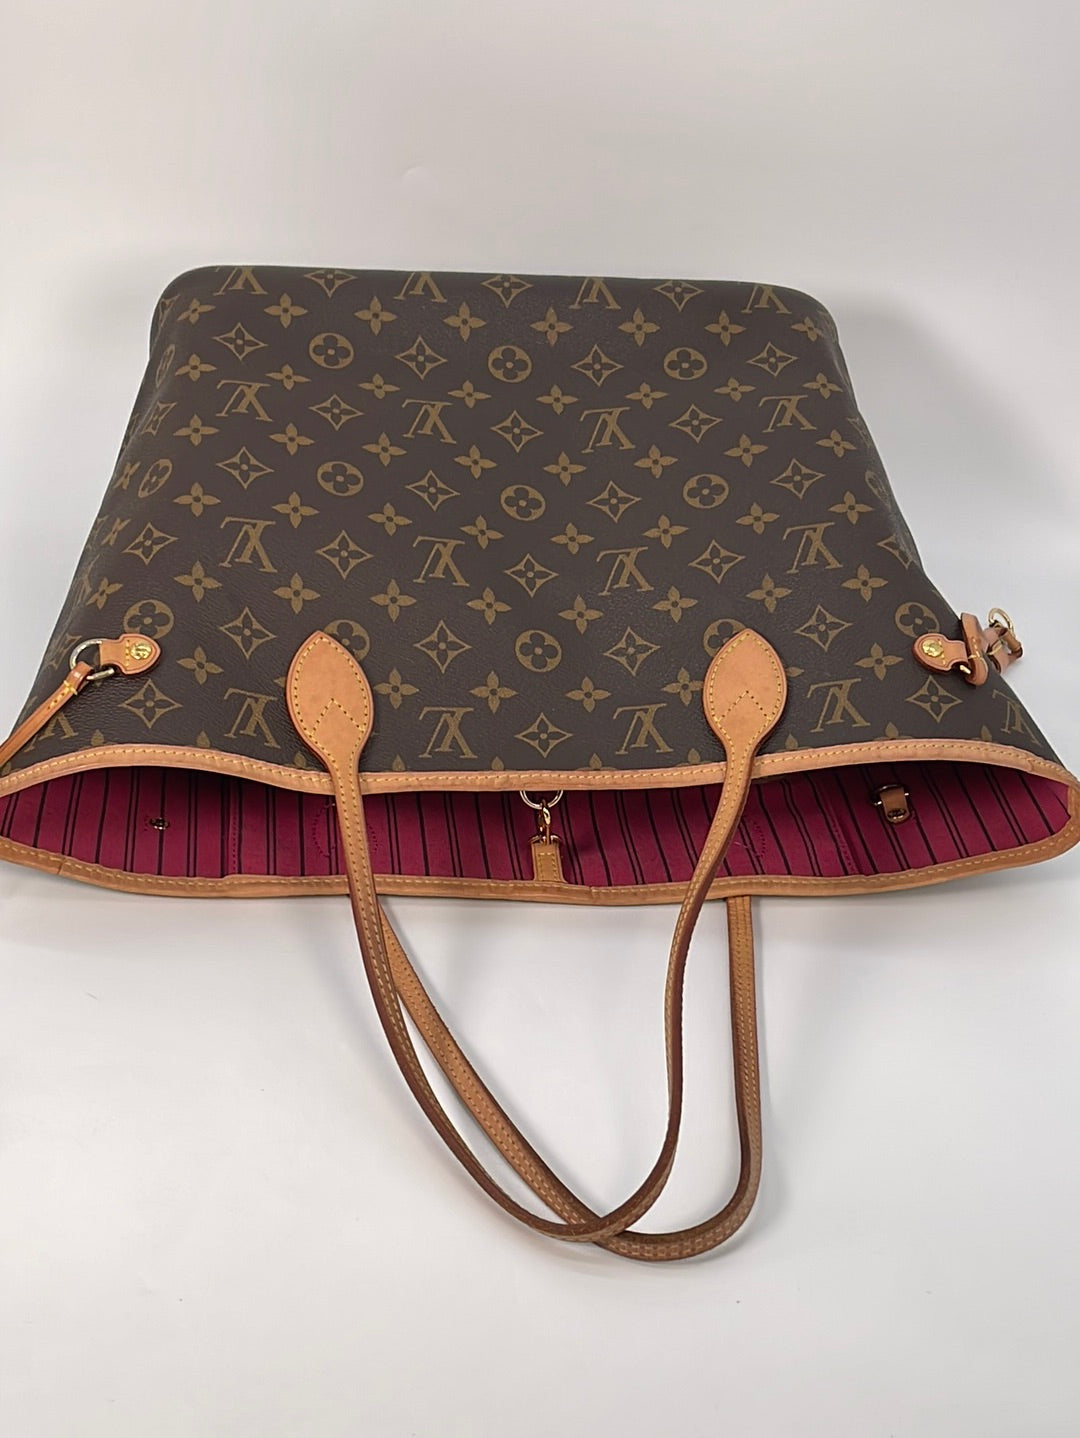 Louis Vuitton Monogram Neverfull MM Tote Bag (hot pink interior) SD229 –  KimmieBBags LLC